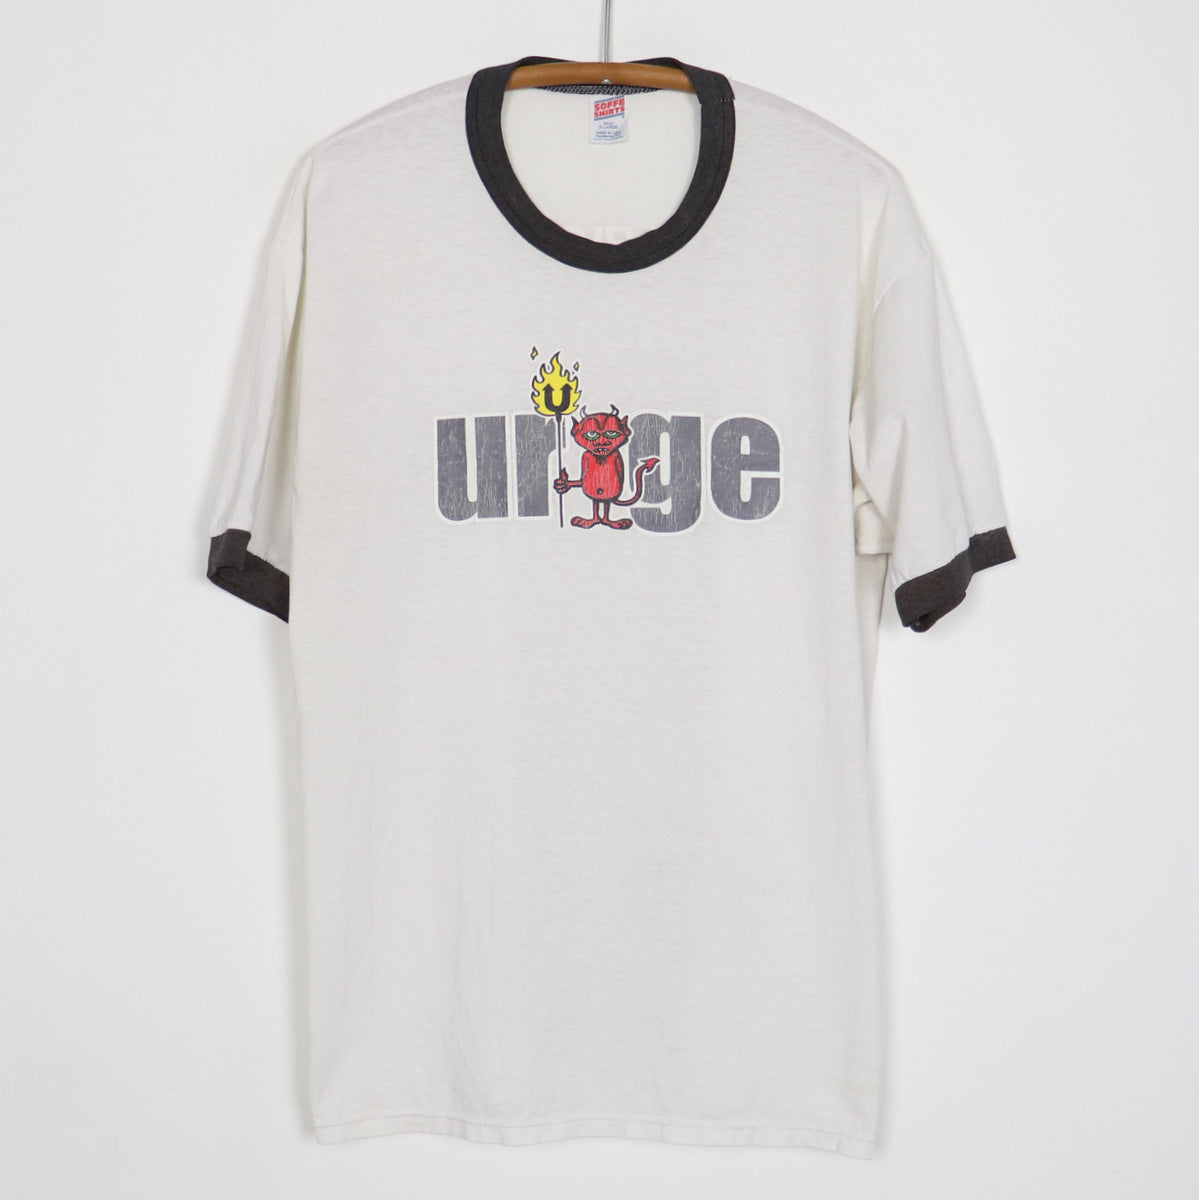 Wyco Vintage 1990s The Urge Shirt